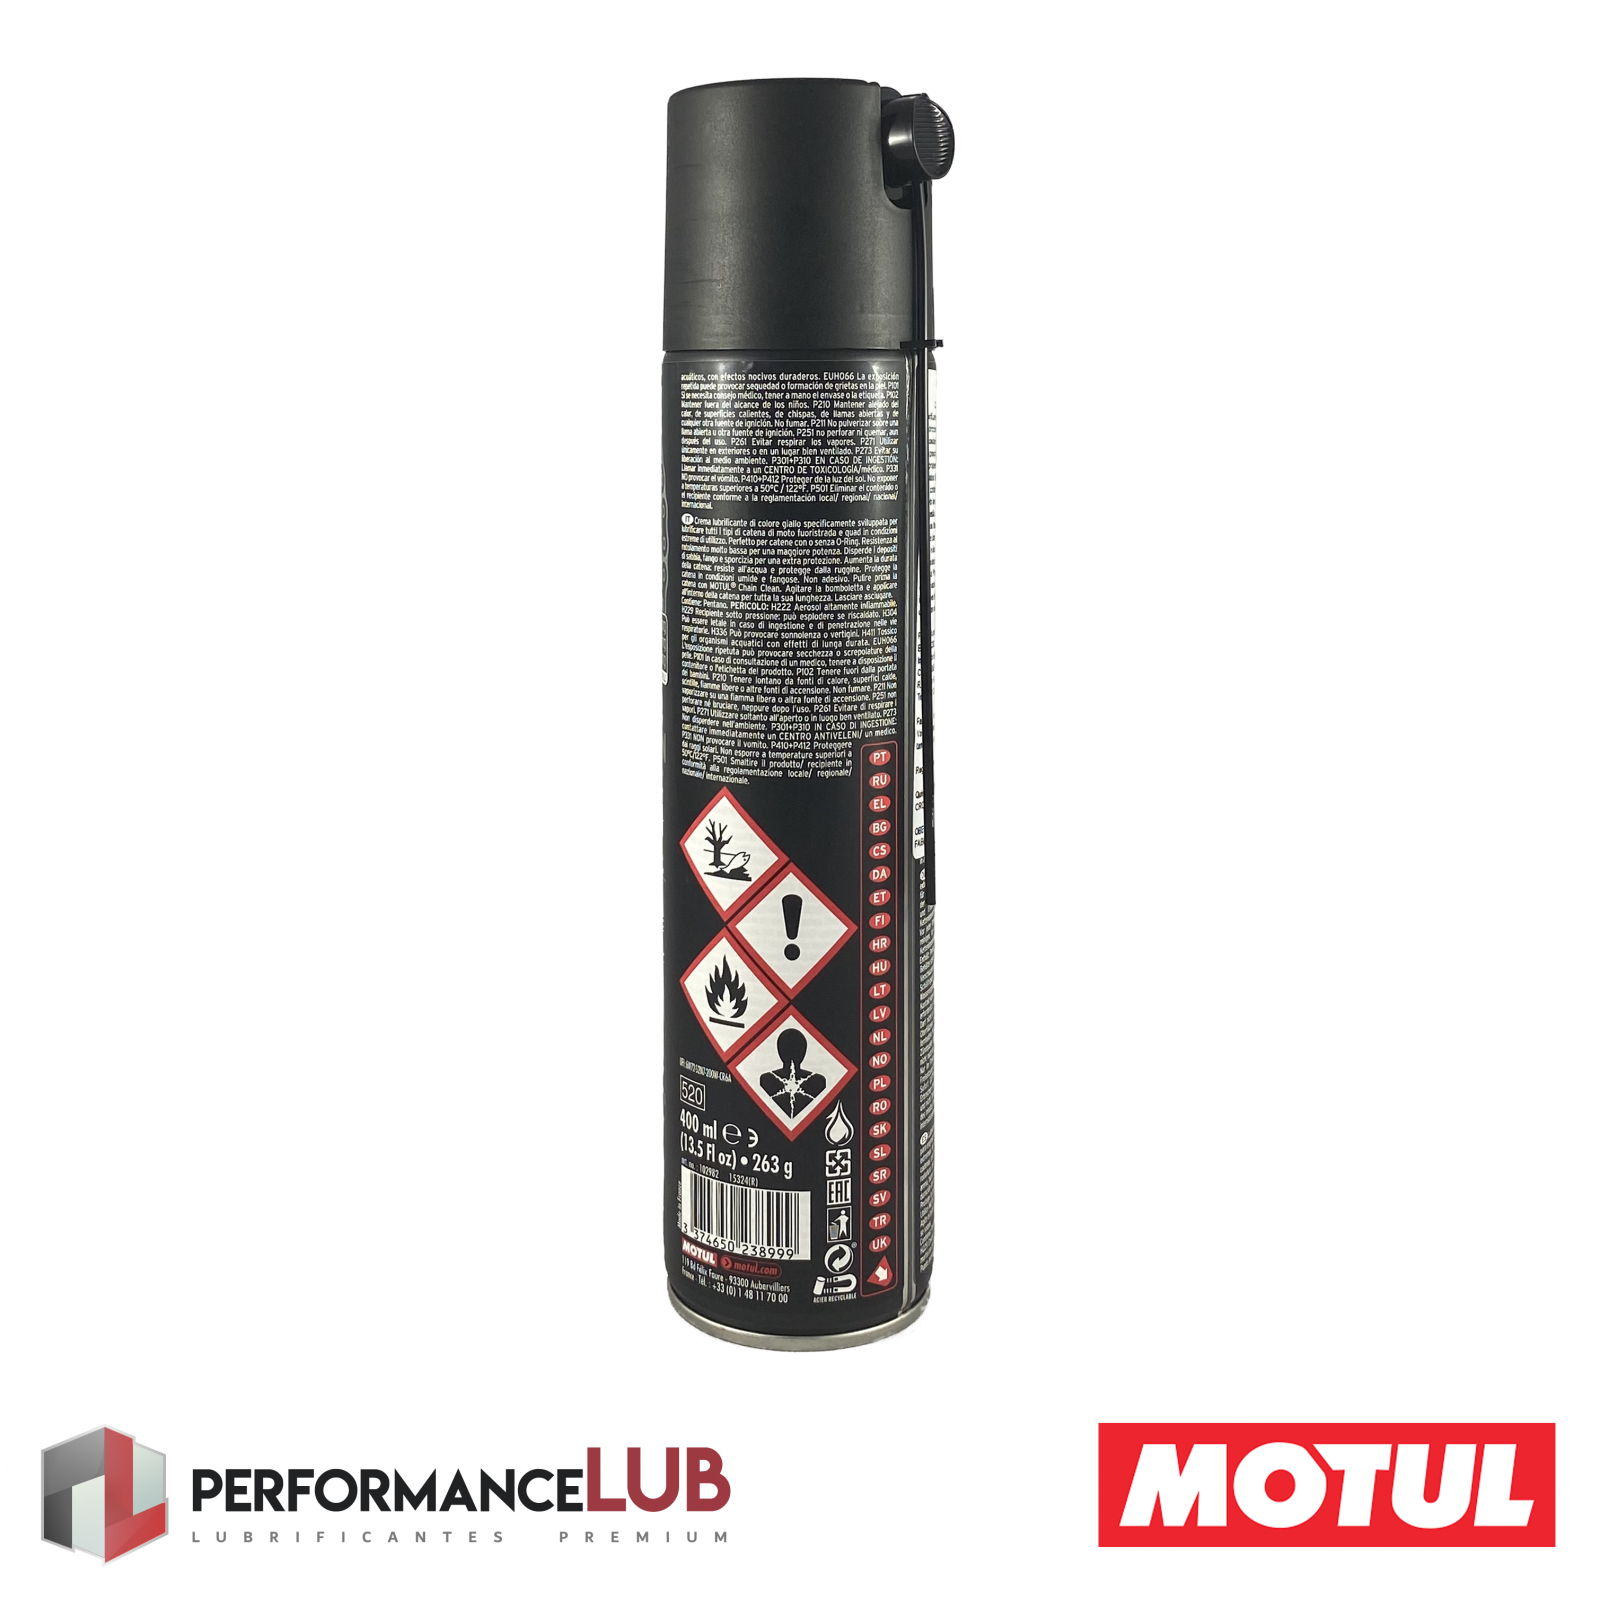 Motul C3 Chain Lube Off Road - 400 ml - PerformanceLUB Lubrificantes Premium